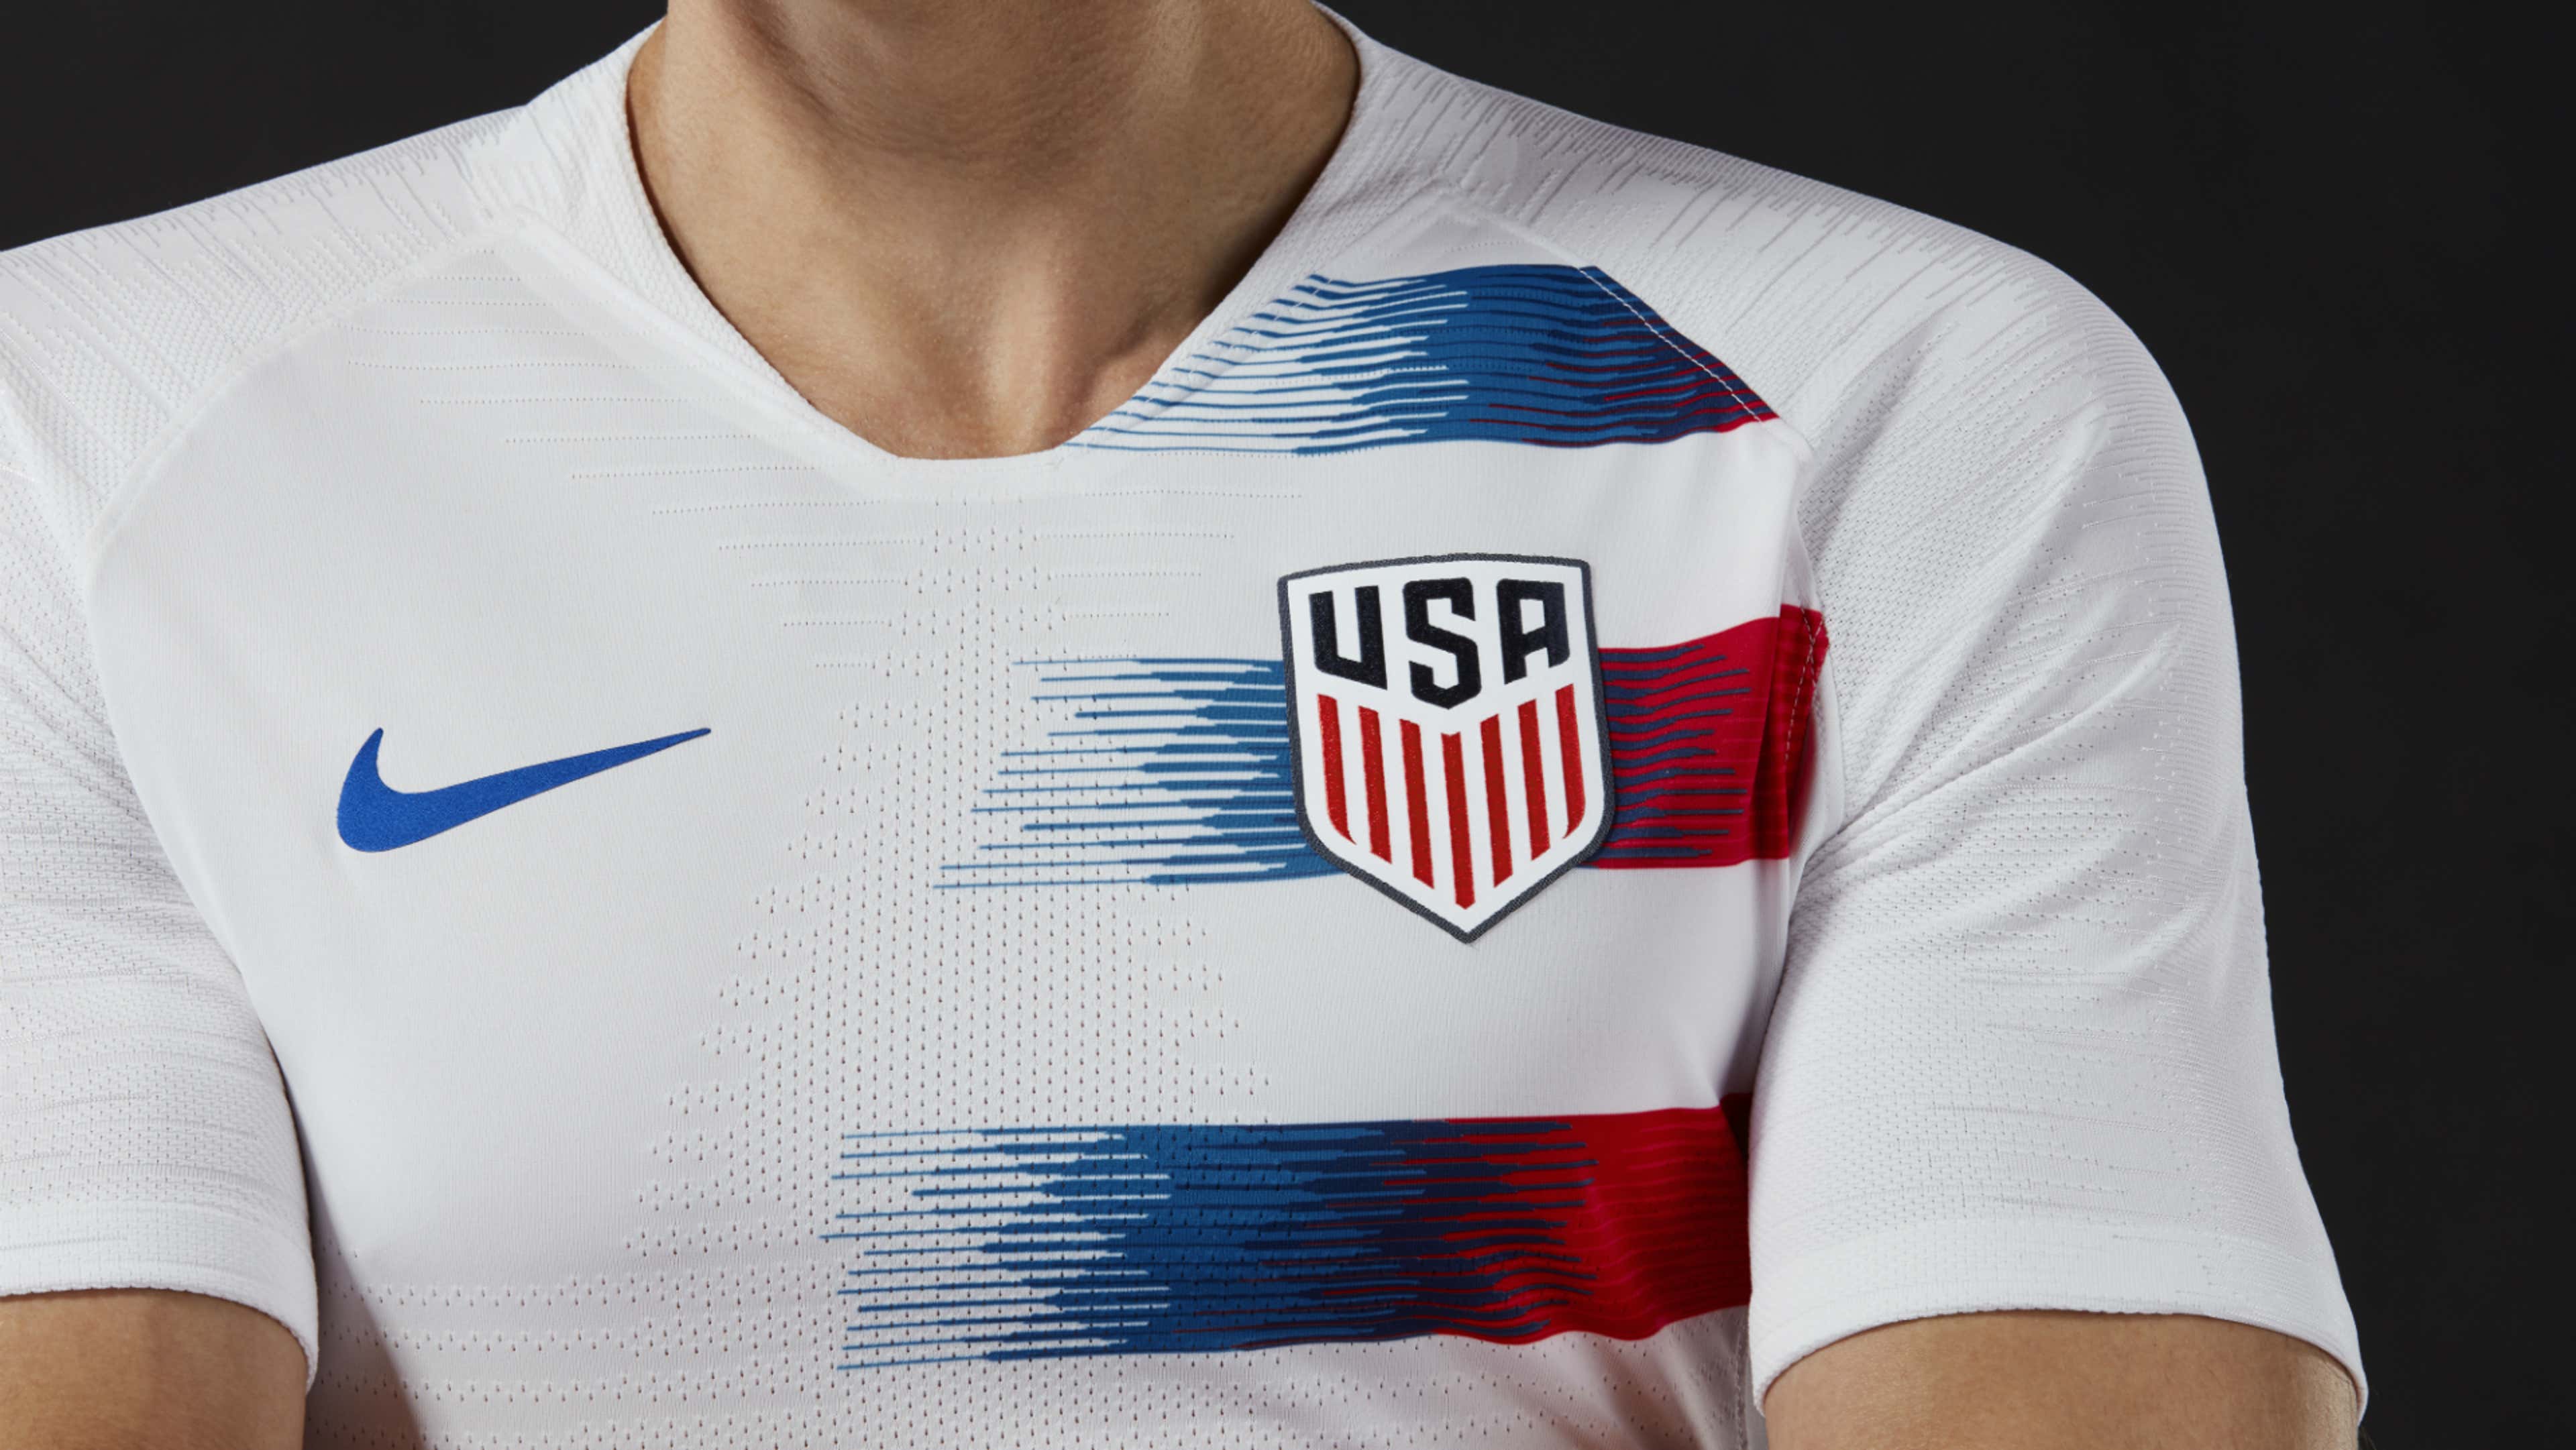 Soccer unveils 2018 uniforms for USMNT and | US